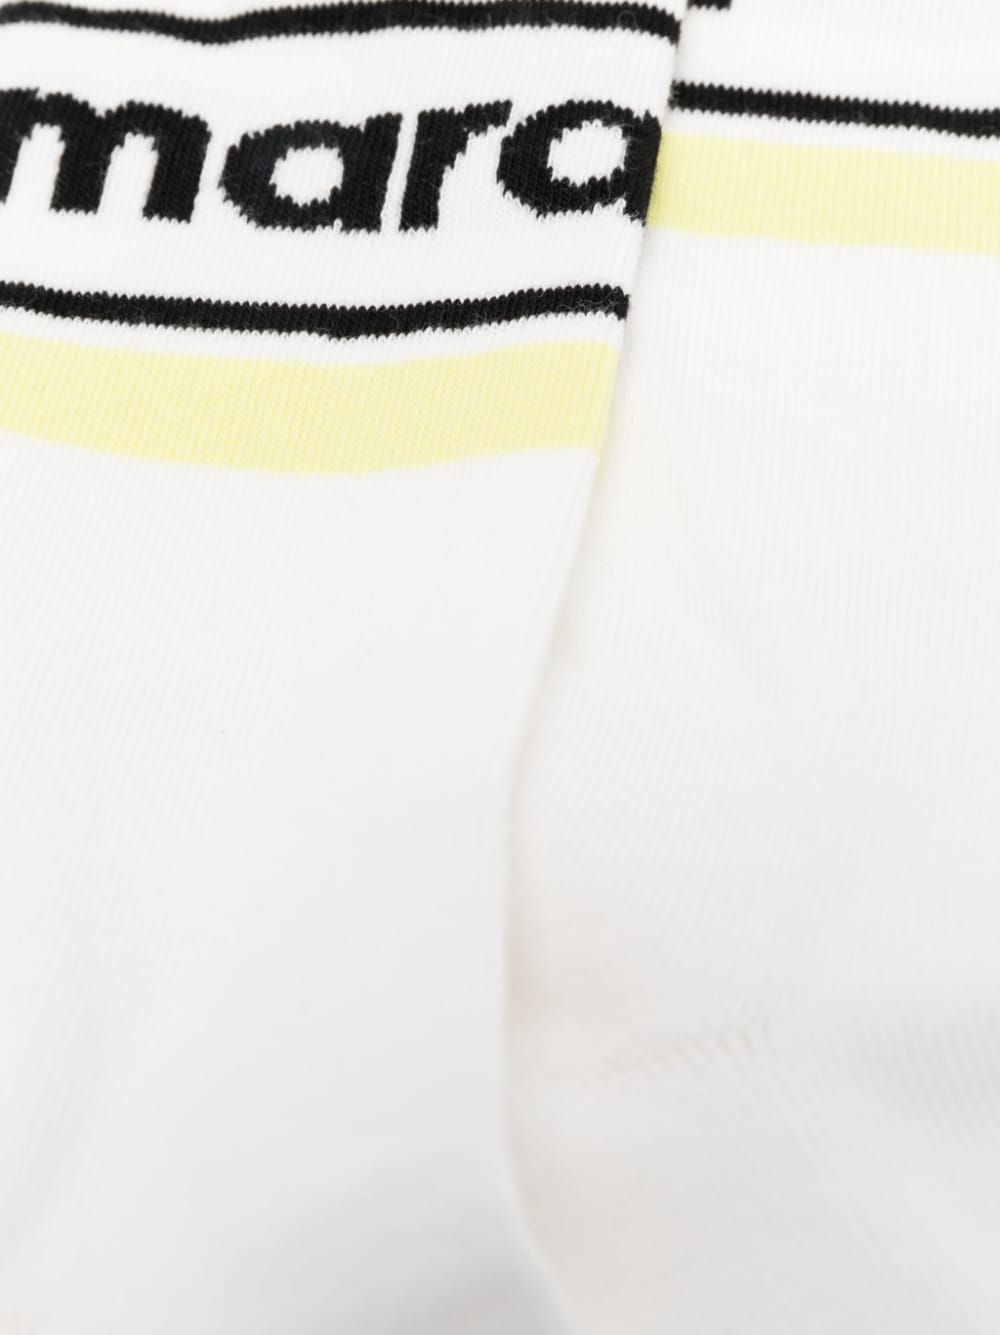 Calzini gialli/neri/bianchi Dona con logo intarsiato